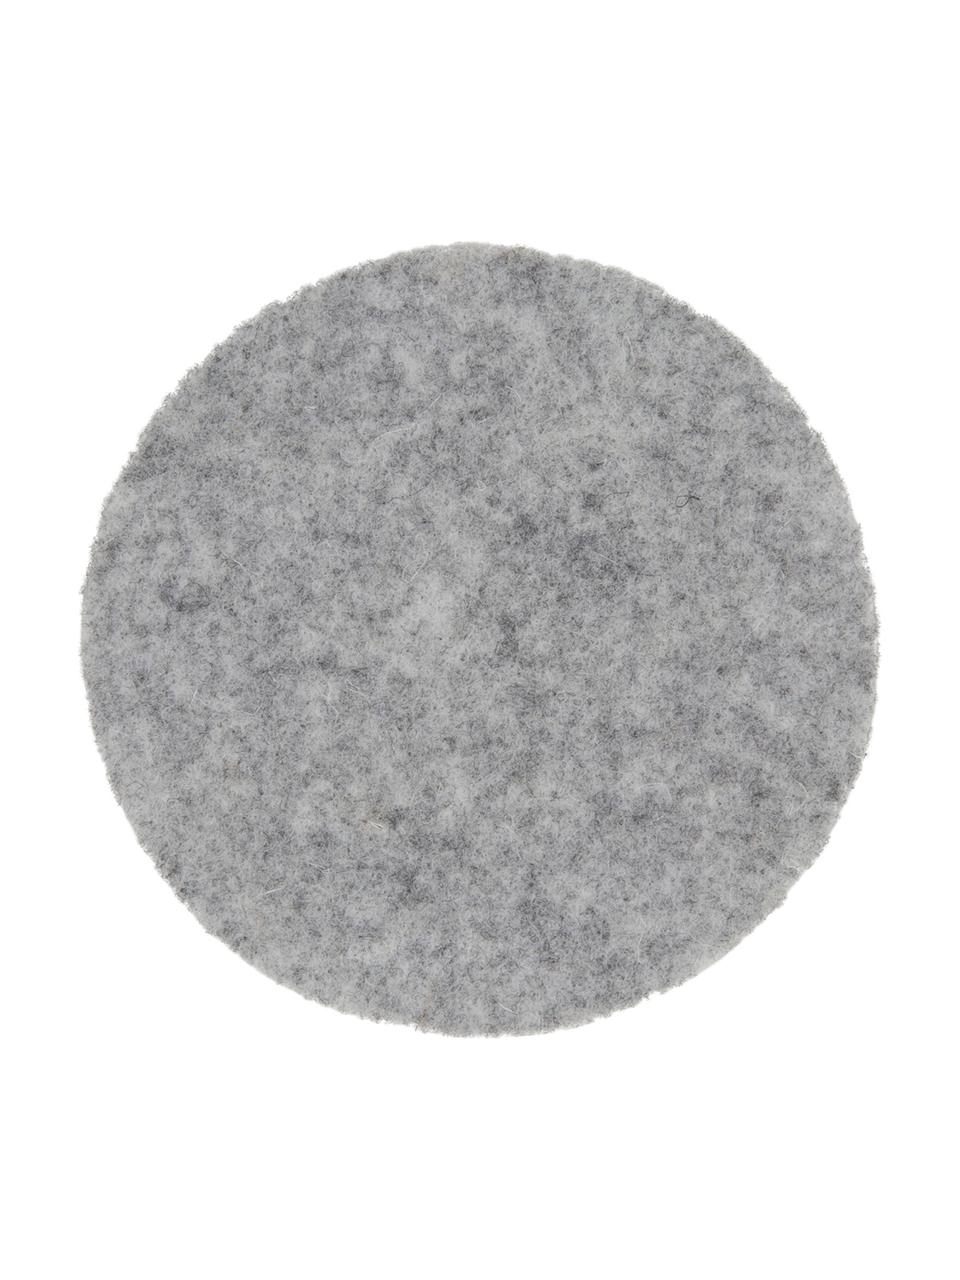 Wollfilz-Untersetzer Leandra in Hellgrau, 6 Stück, 90% Wolle, 10% Polyethylen, Hellgrau, Ø 10 cm